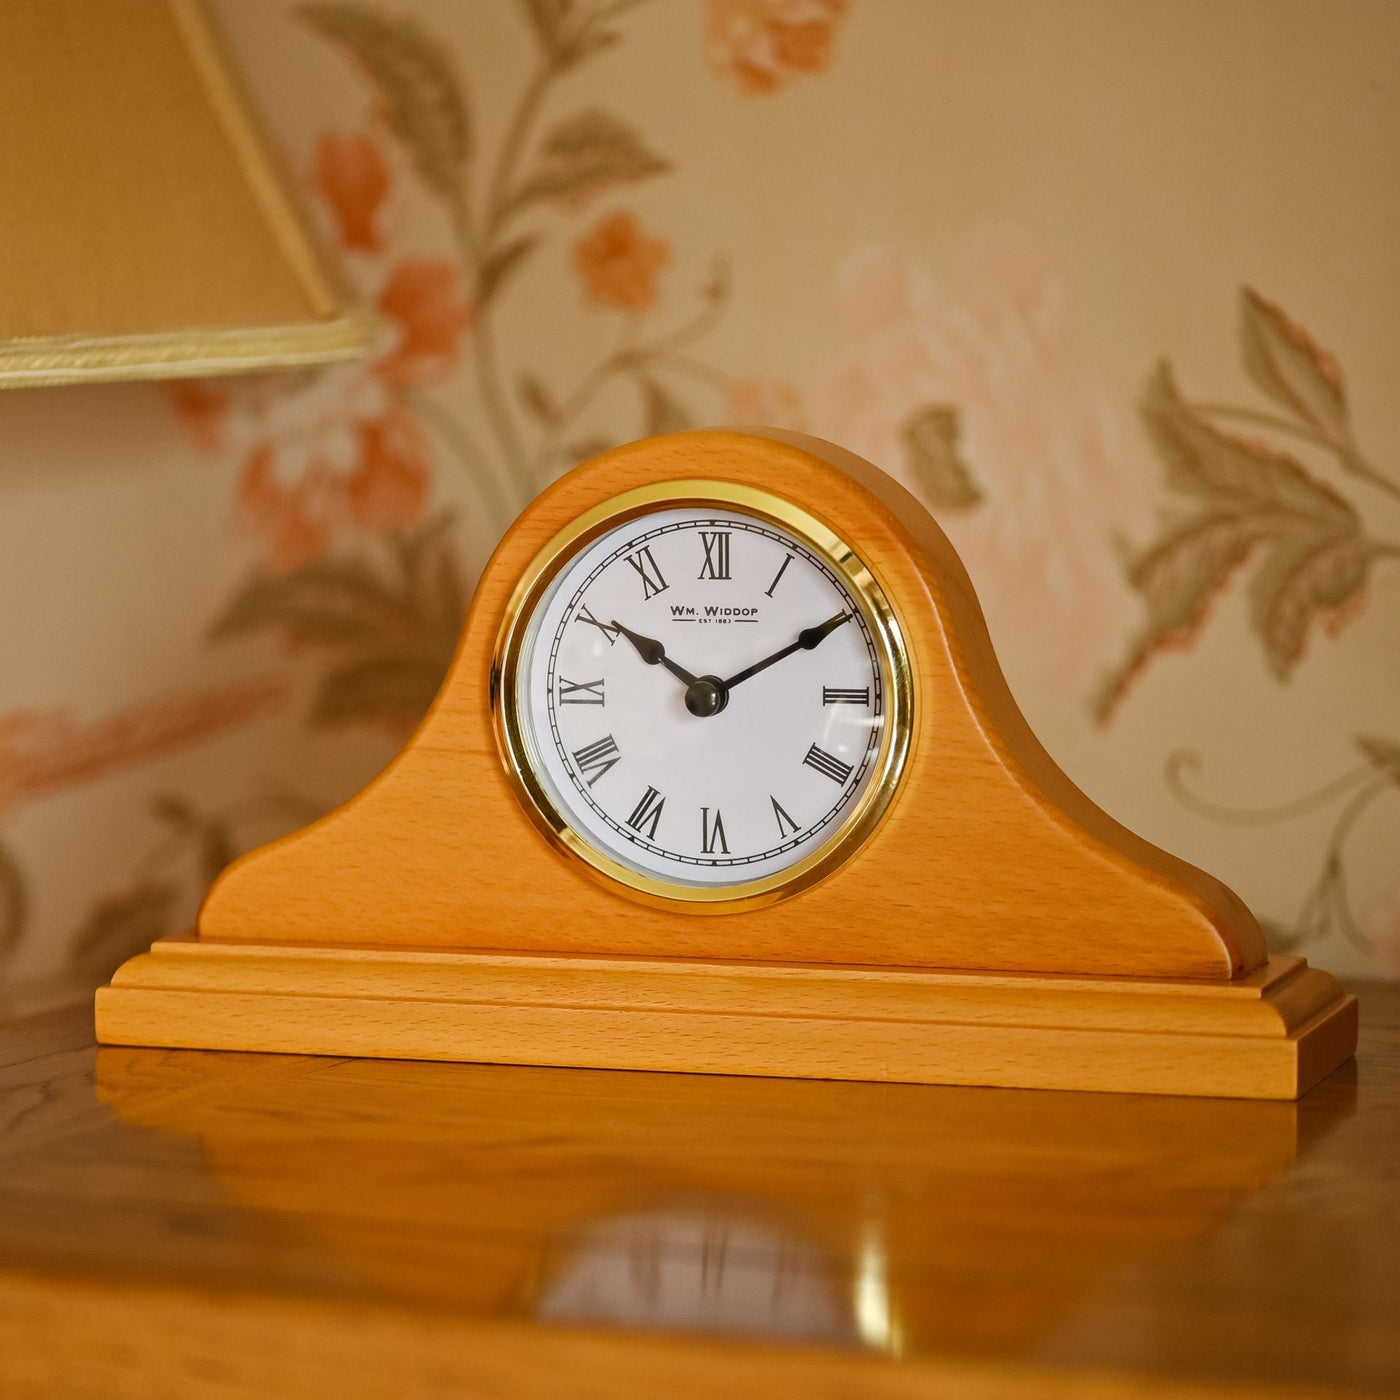 WM.Widdop. Wooden Napoleon Mantel Clock *NEW* - timeframedclocks